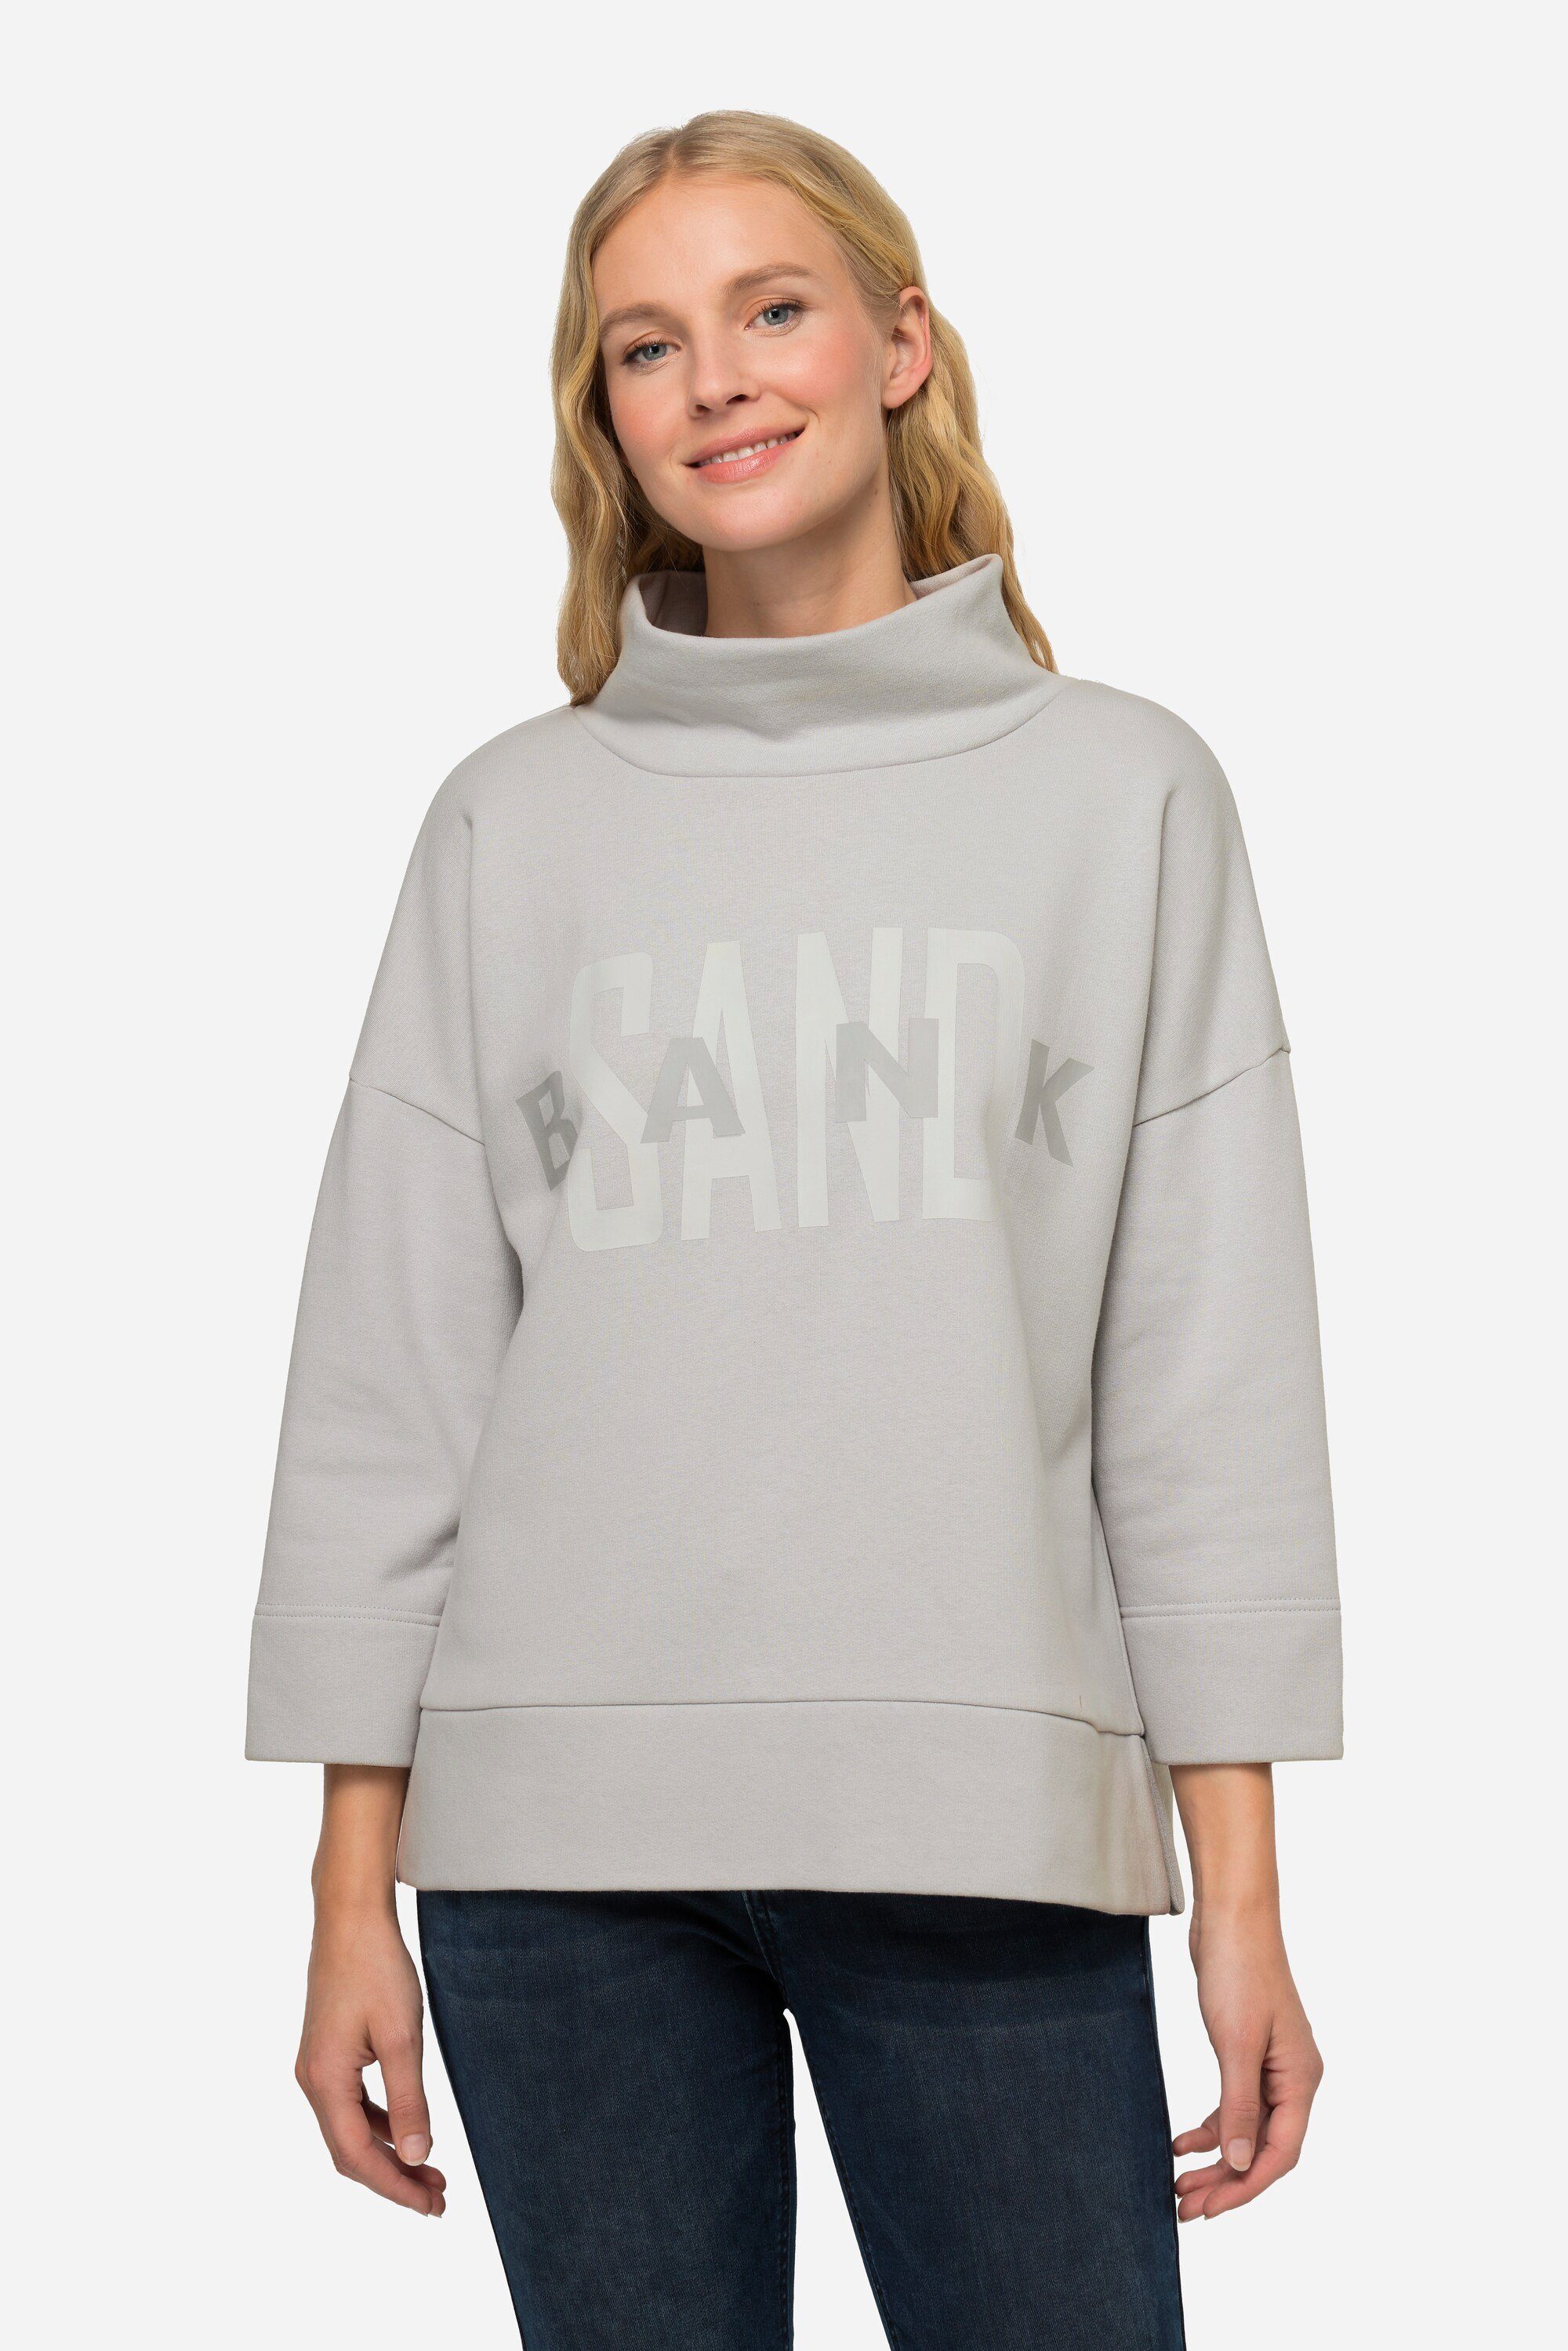 Laurasøn Sweatshirt Sweatshirt SANDBANK-Druck oversized Stehkragen